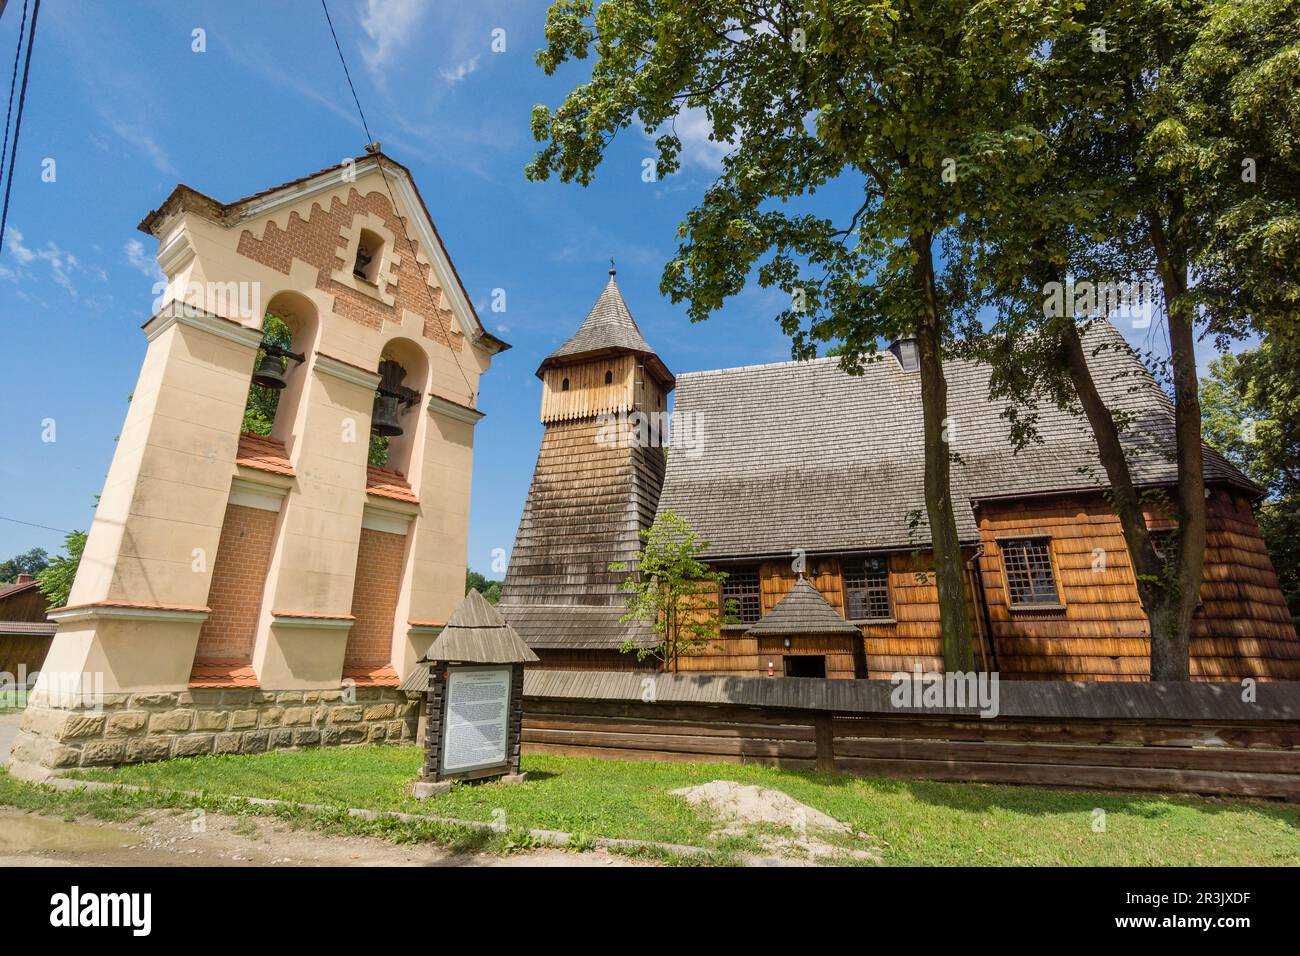 iglesia del arcángel San Miguel, siglo XV-XVI construida integramente con madera, Binarowa, voivodato de la Pequeña Polonia, Cárpatos, Polonia, europe. Stock Photo